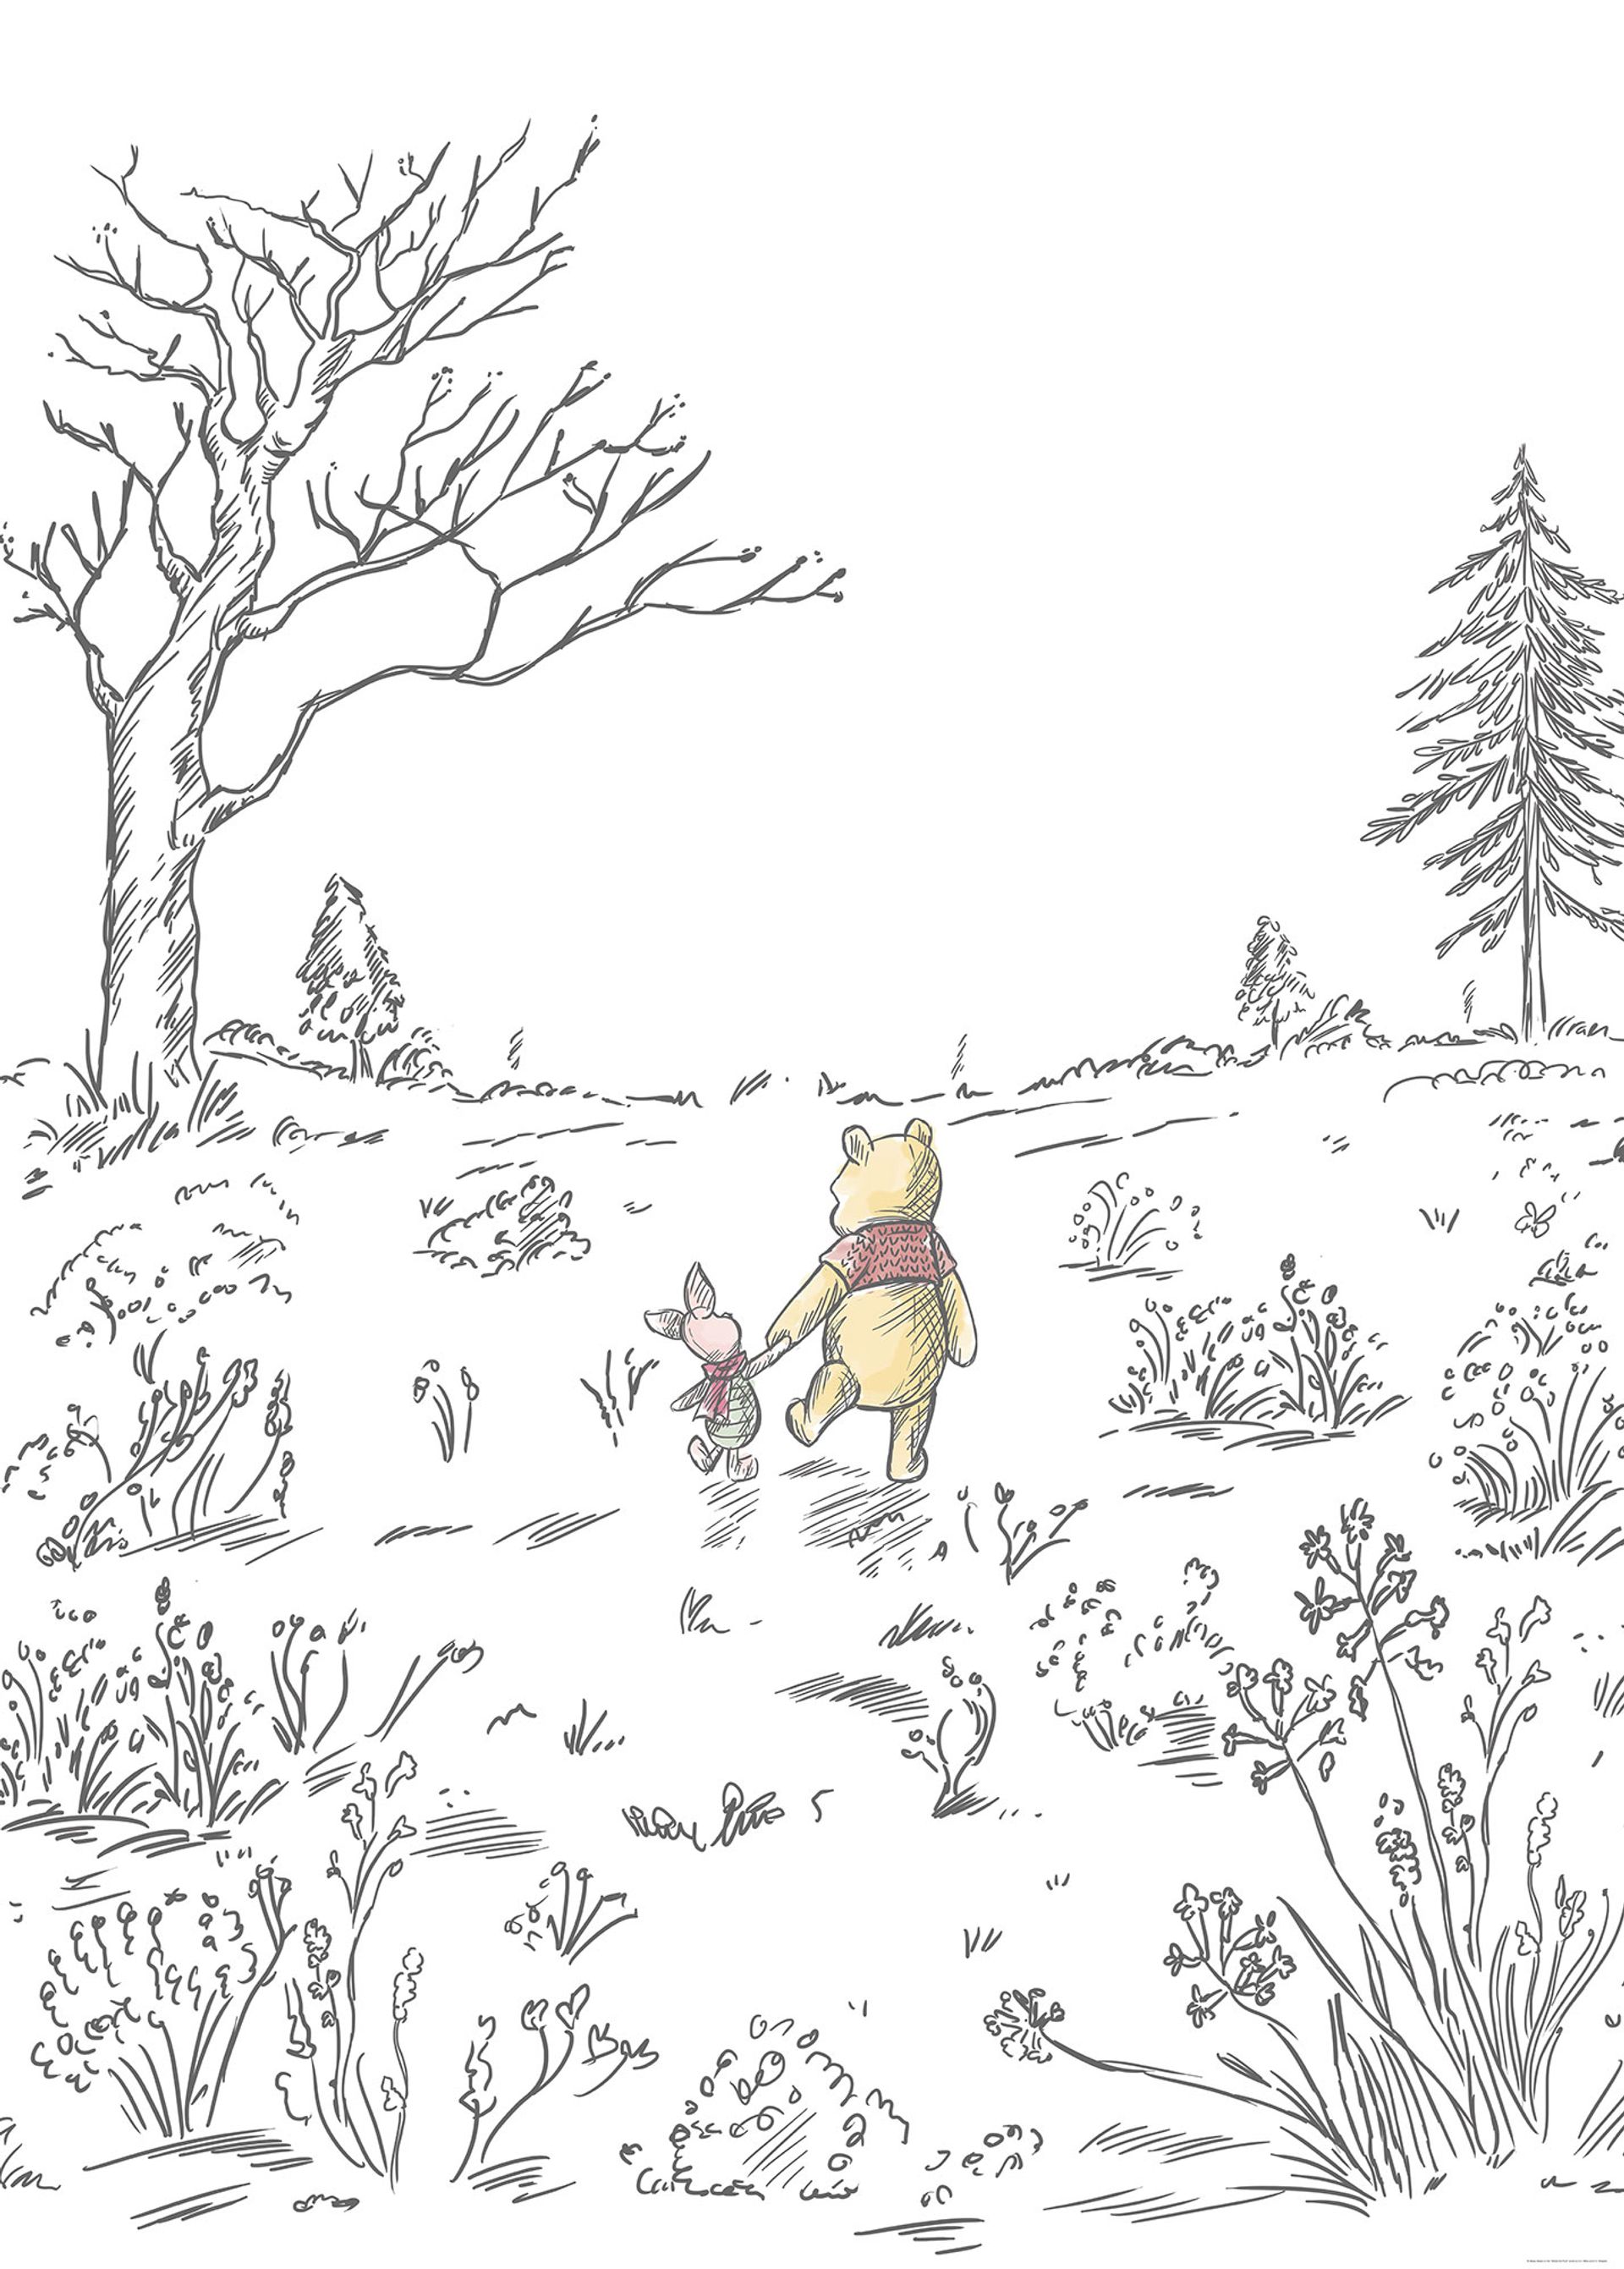 Vlies Fototapete - Winnie the Pooh Walk - Größe 200 x 280 cm